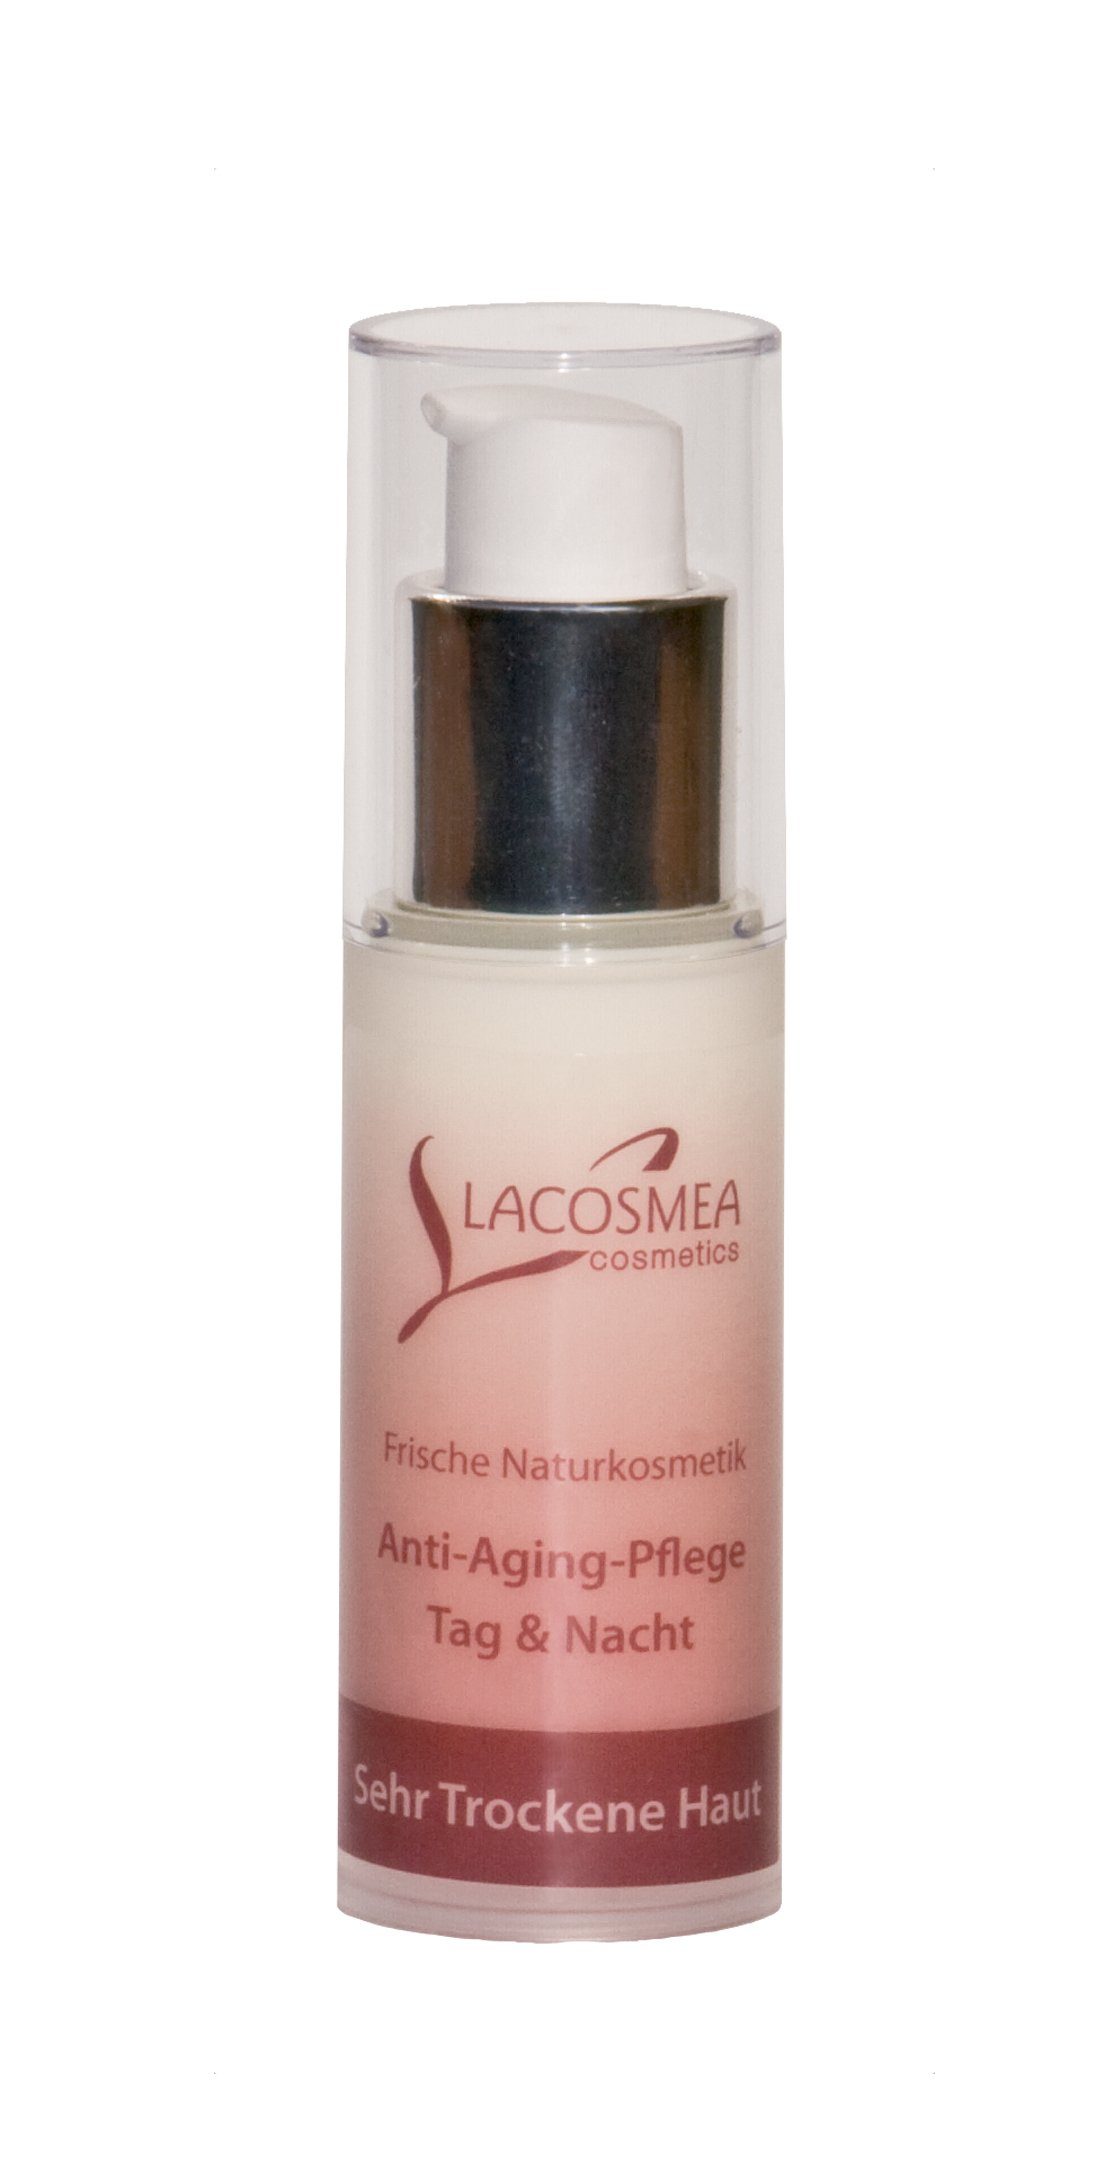 Lacosmea Cosmetics Anti für Aging trockene Pflege Gesichtspflege sehr Haut